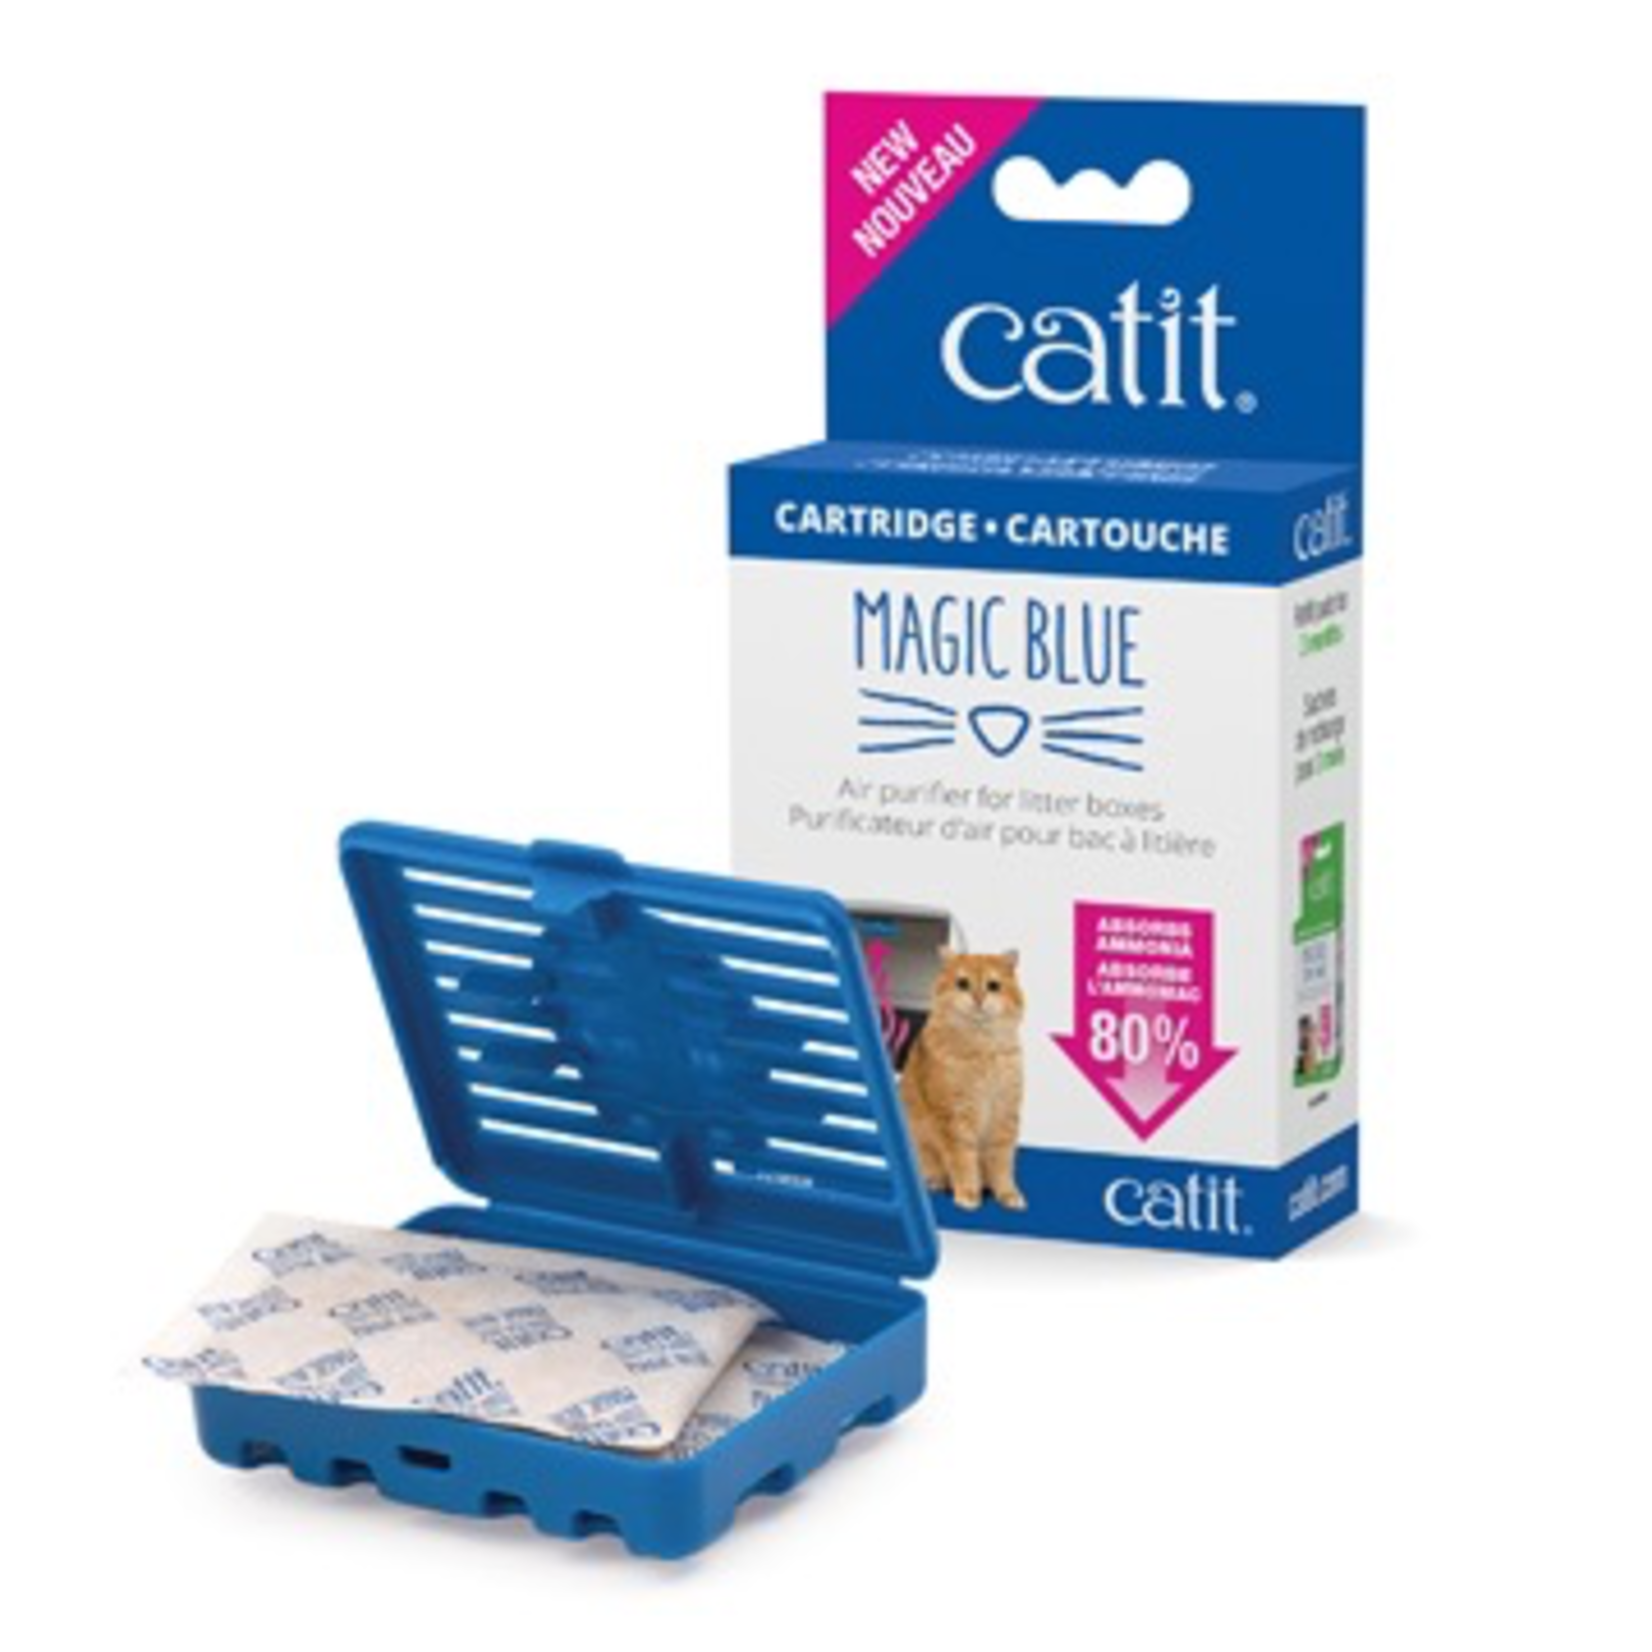 CAT IT (W) Catit Magic Blue Cartridge Set